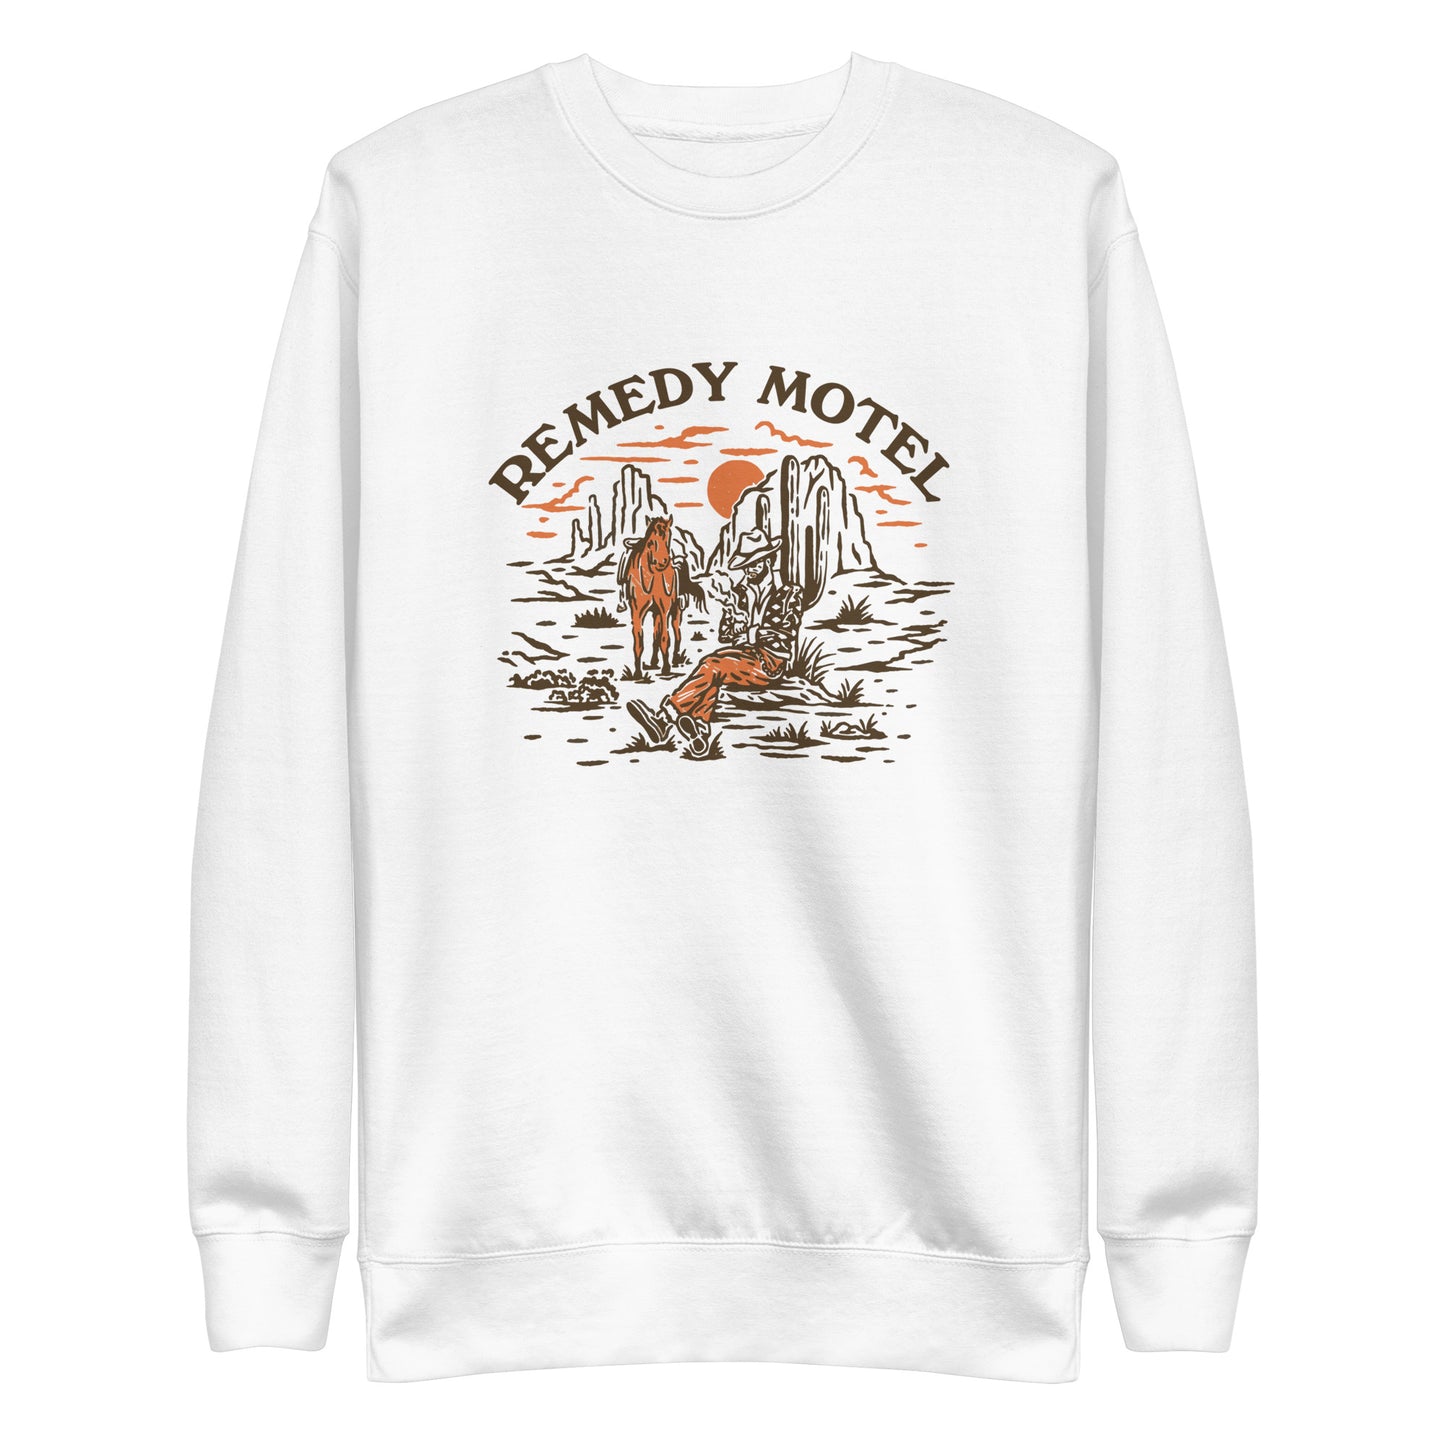 Remedy Motel "Take a Load Off" Sweatshirt